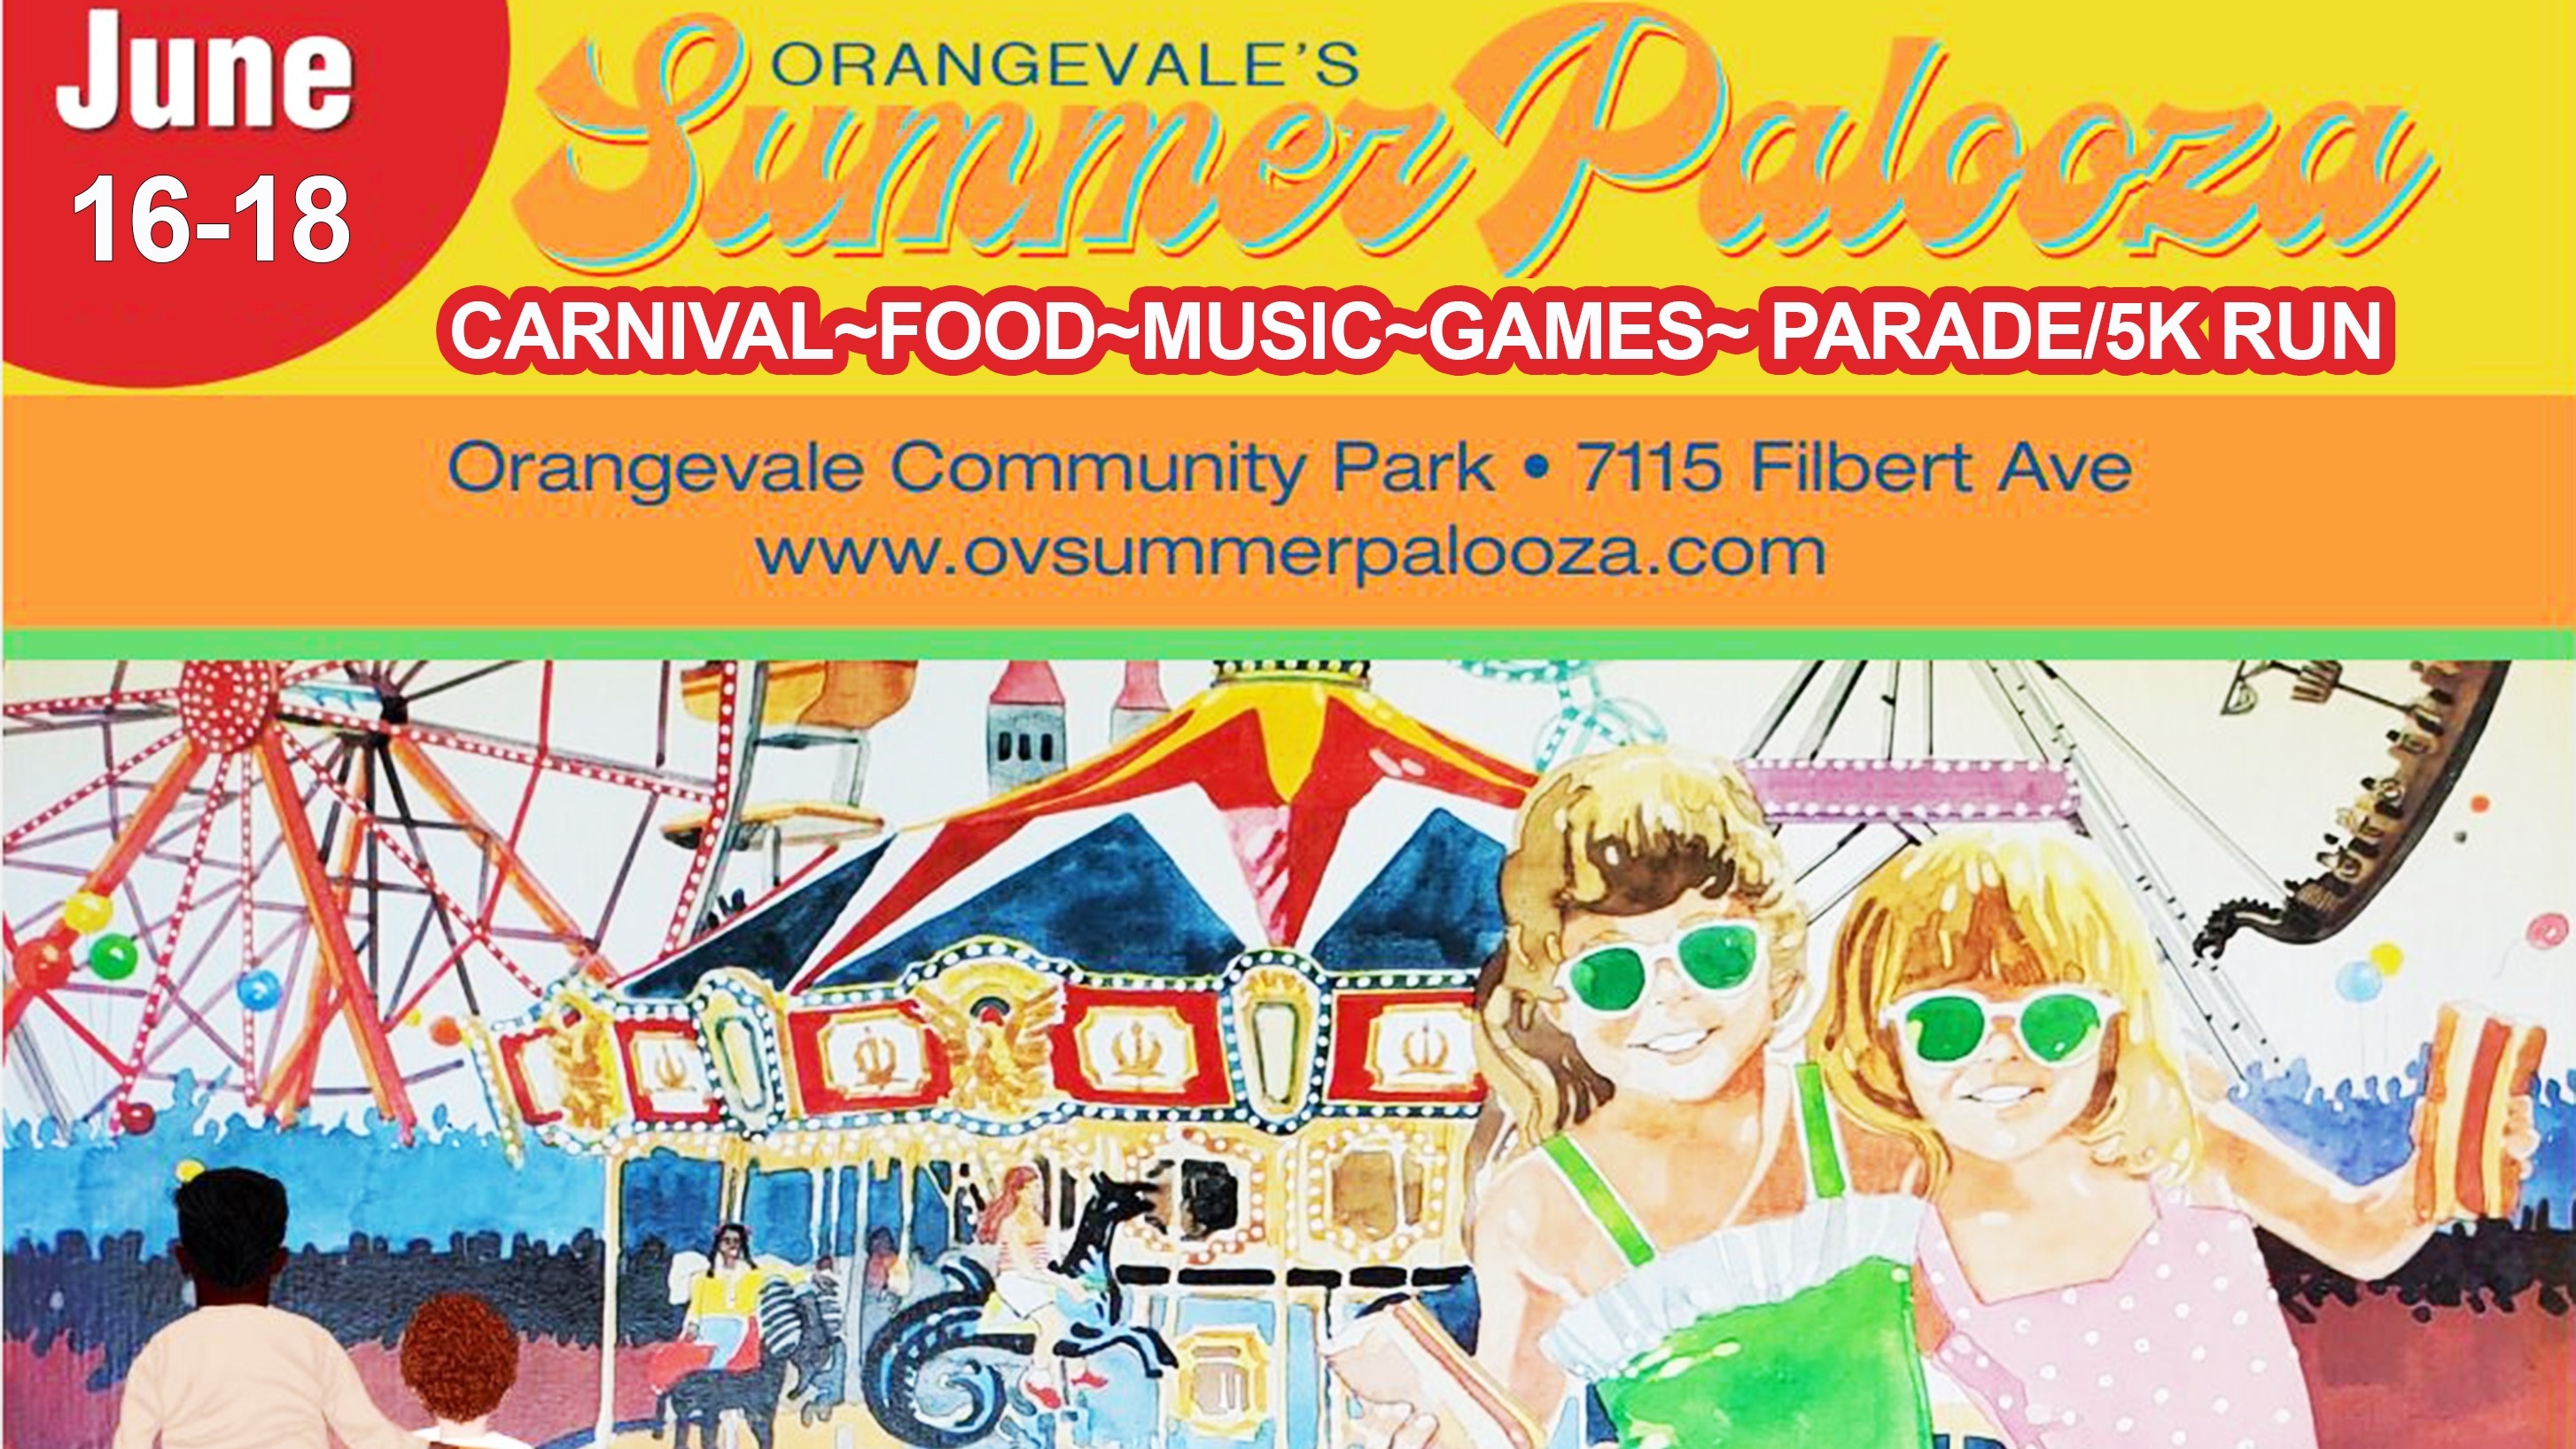 Orangevale Summer Palooza SponsorMyEvent